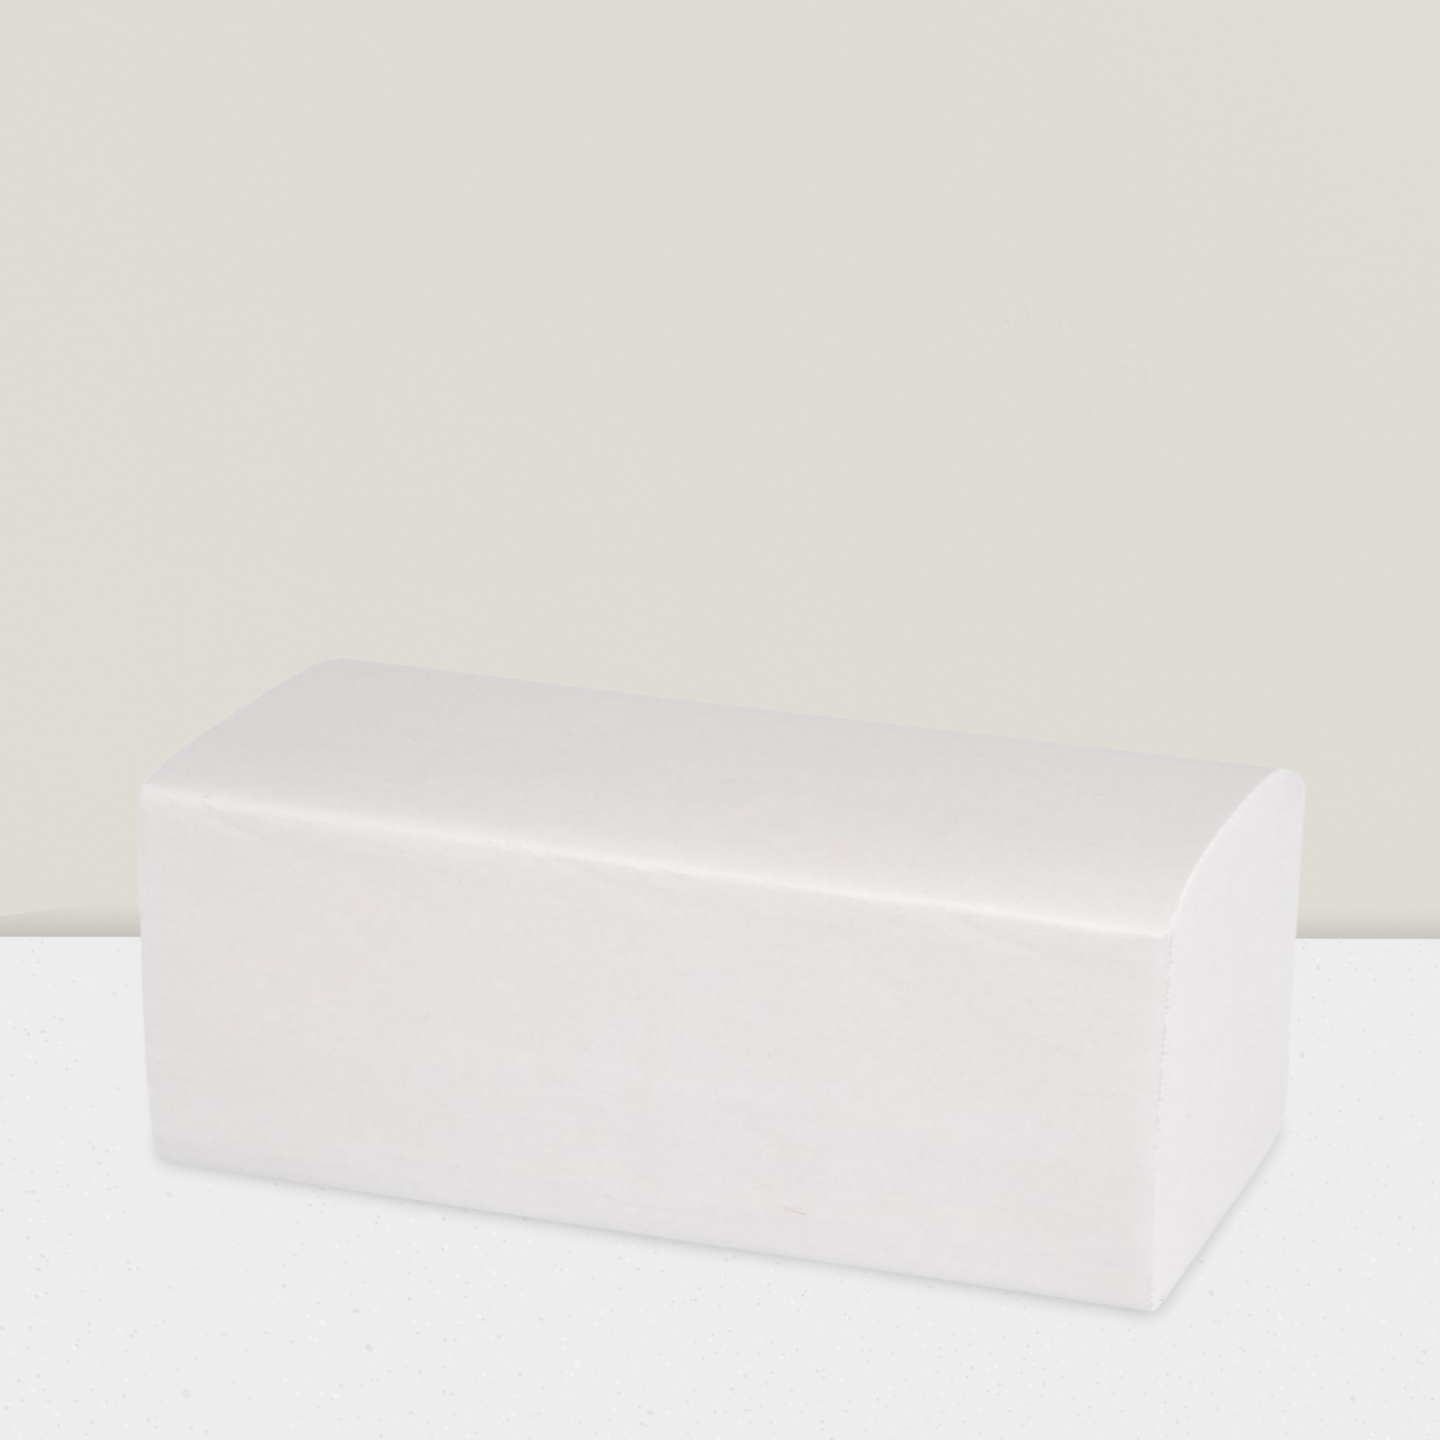 Papier- und Falthandtuch, V-Falz, 23 x 21cm, 2-lagig, weiß